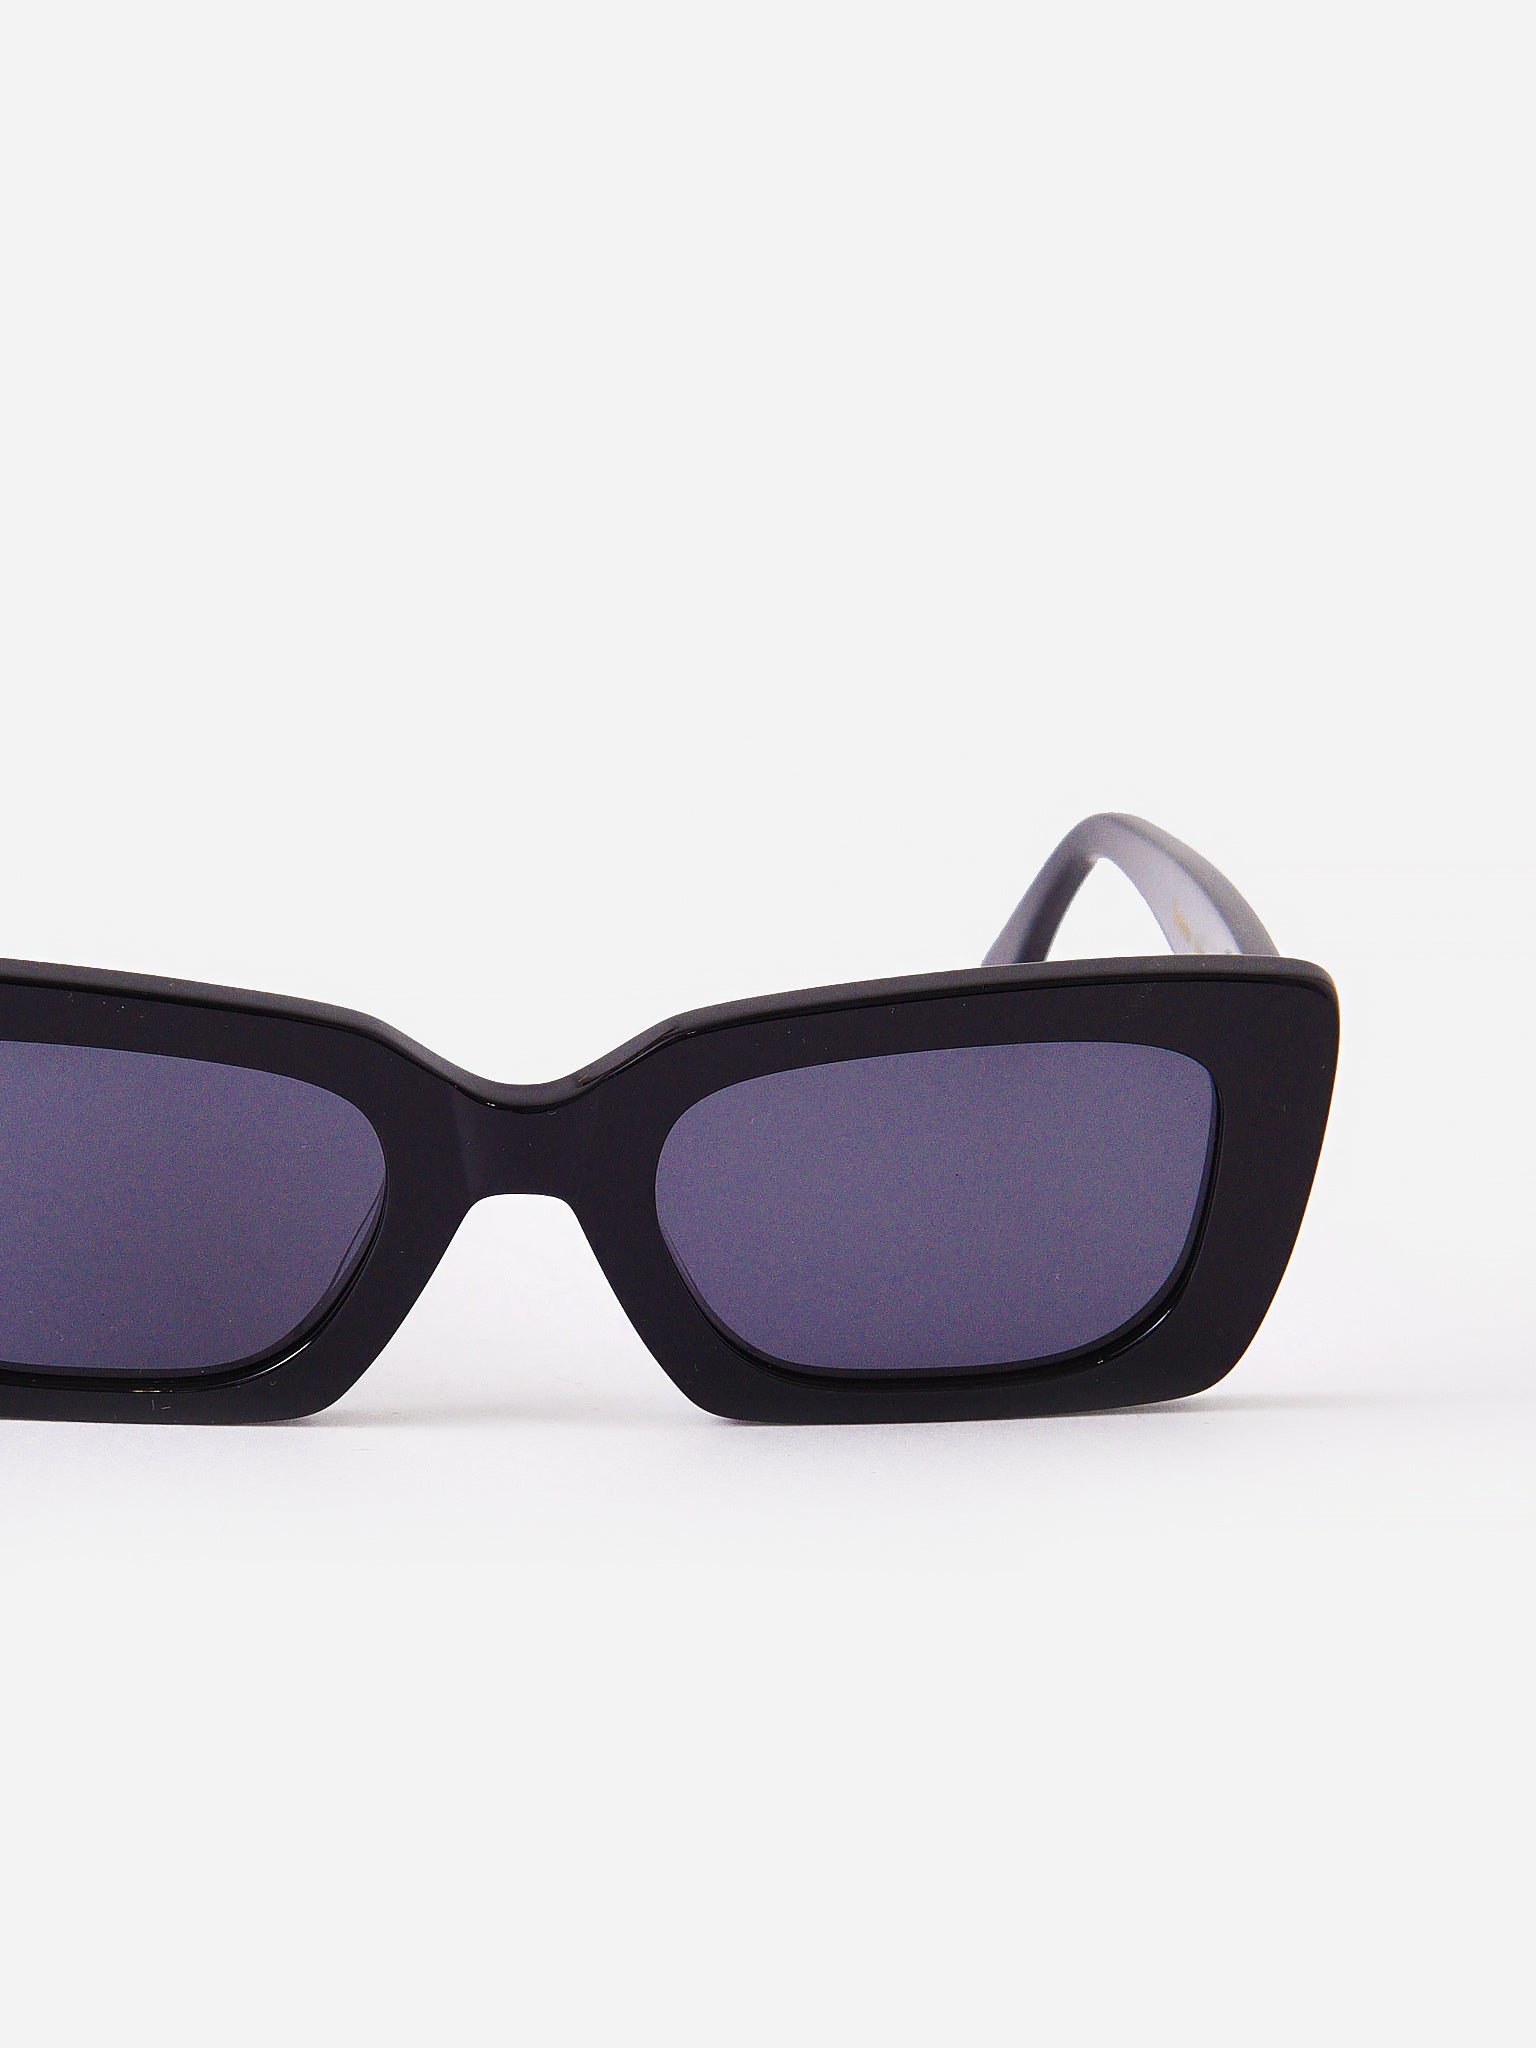 Designer Unisex Illesteva Sunglasses With Flower Lens For Travel And Beach  Black/Grey From Fashion6516, $20.03